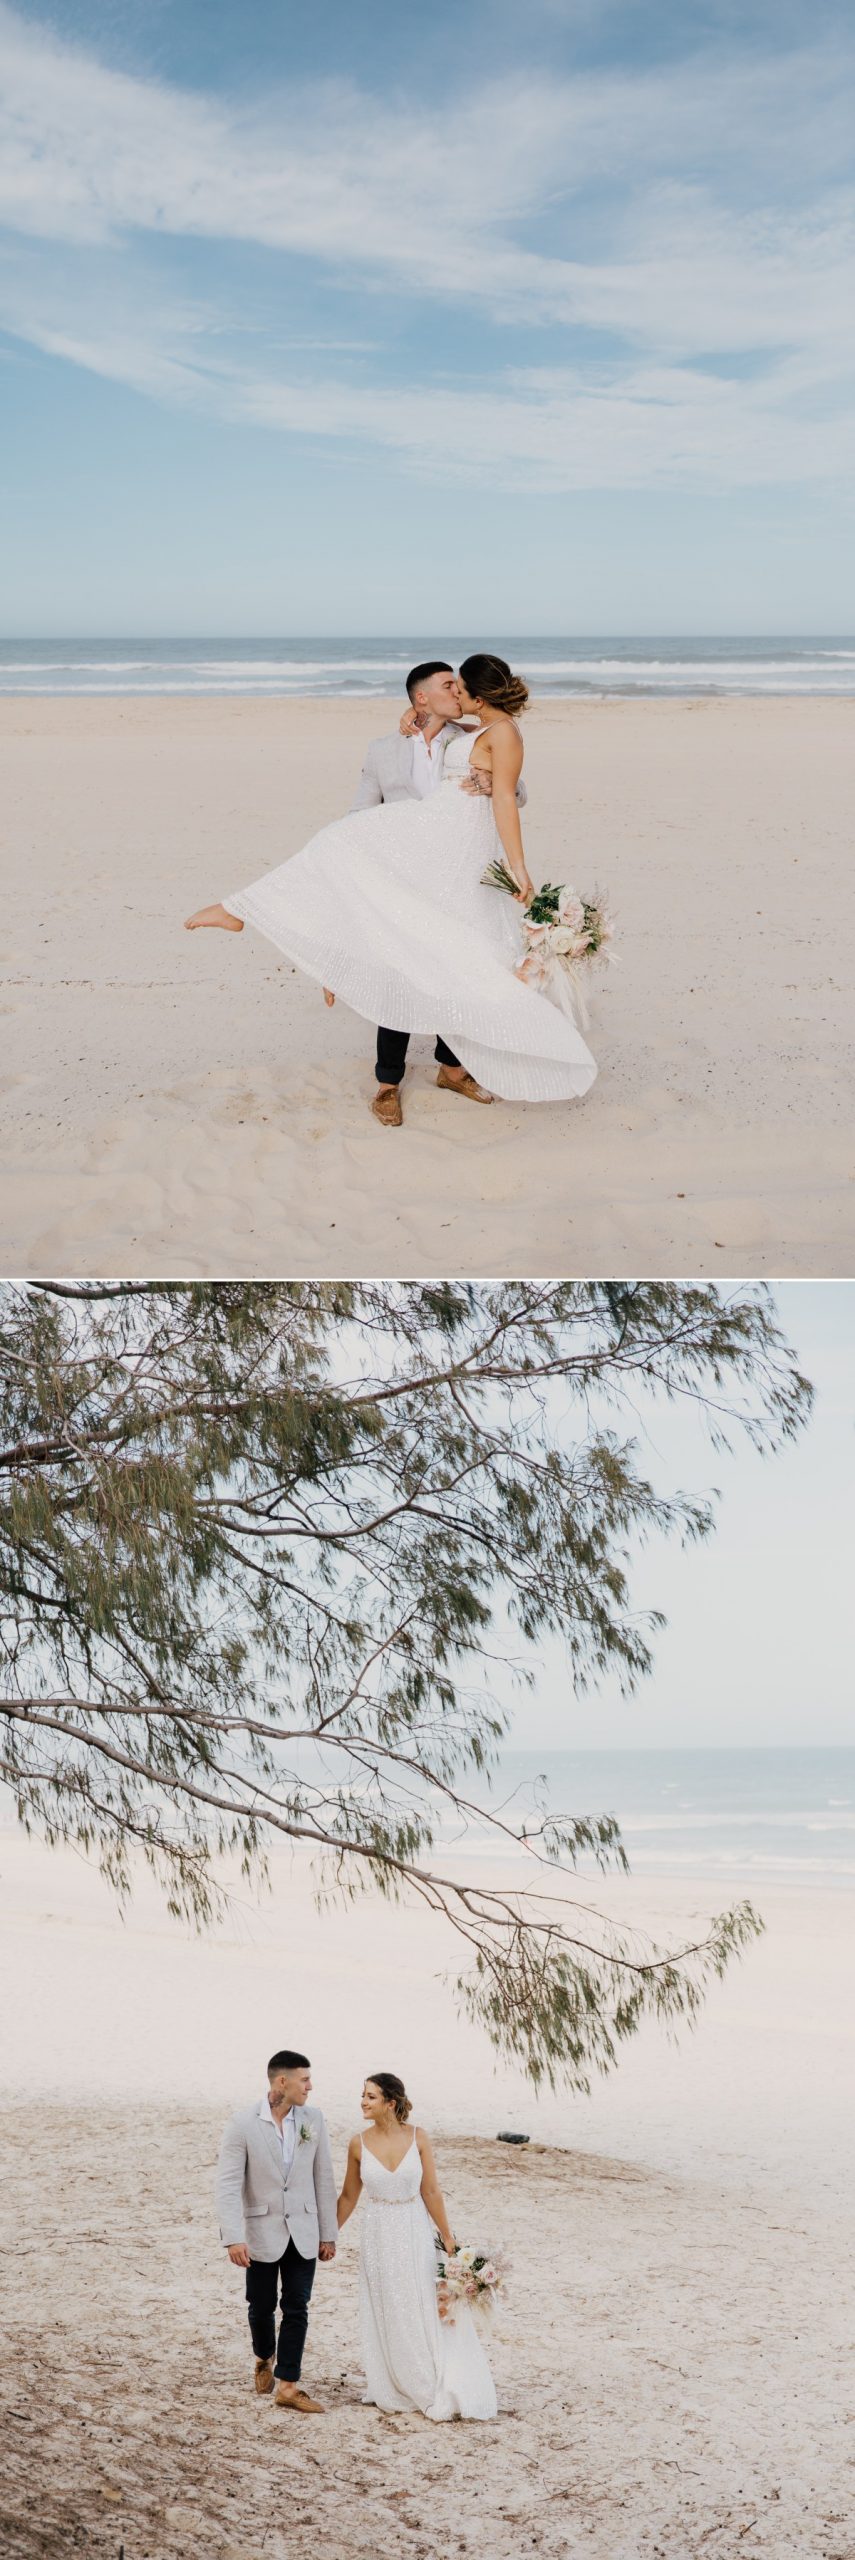 Gold Coast beach wedding ceremony